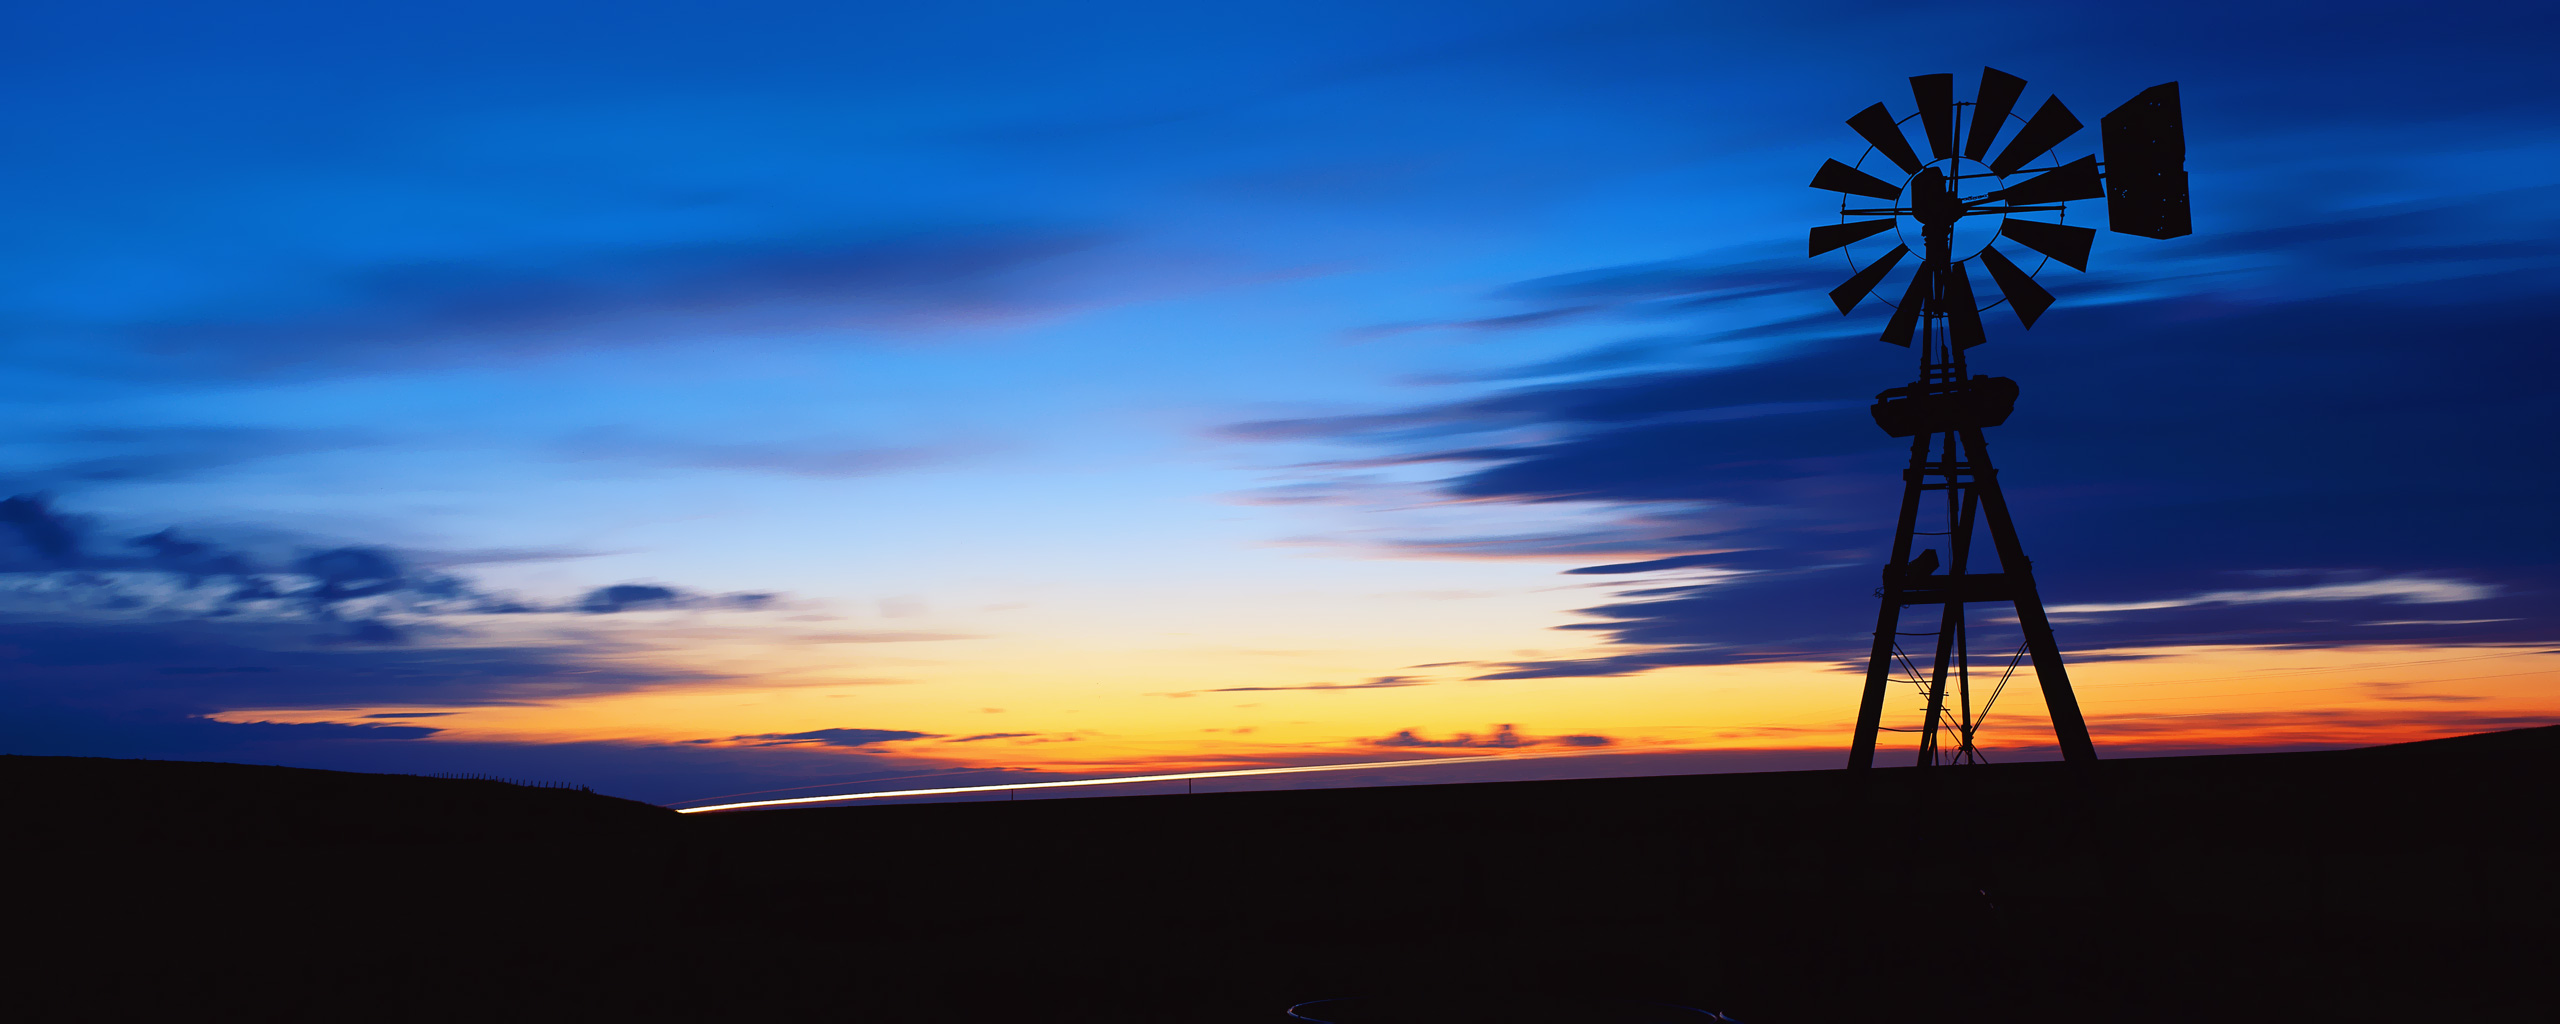 sunset wallpaper,sky,windmill,sunset,horizon,blue